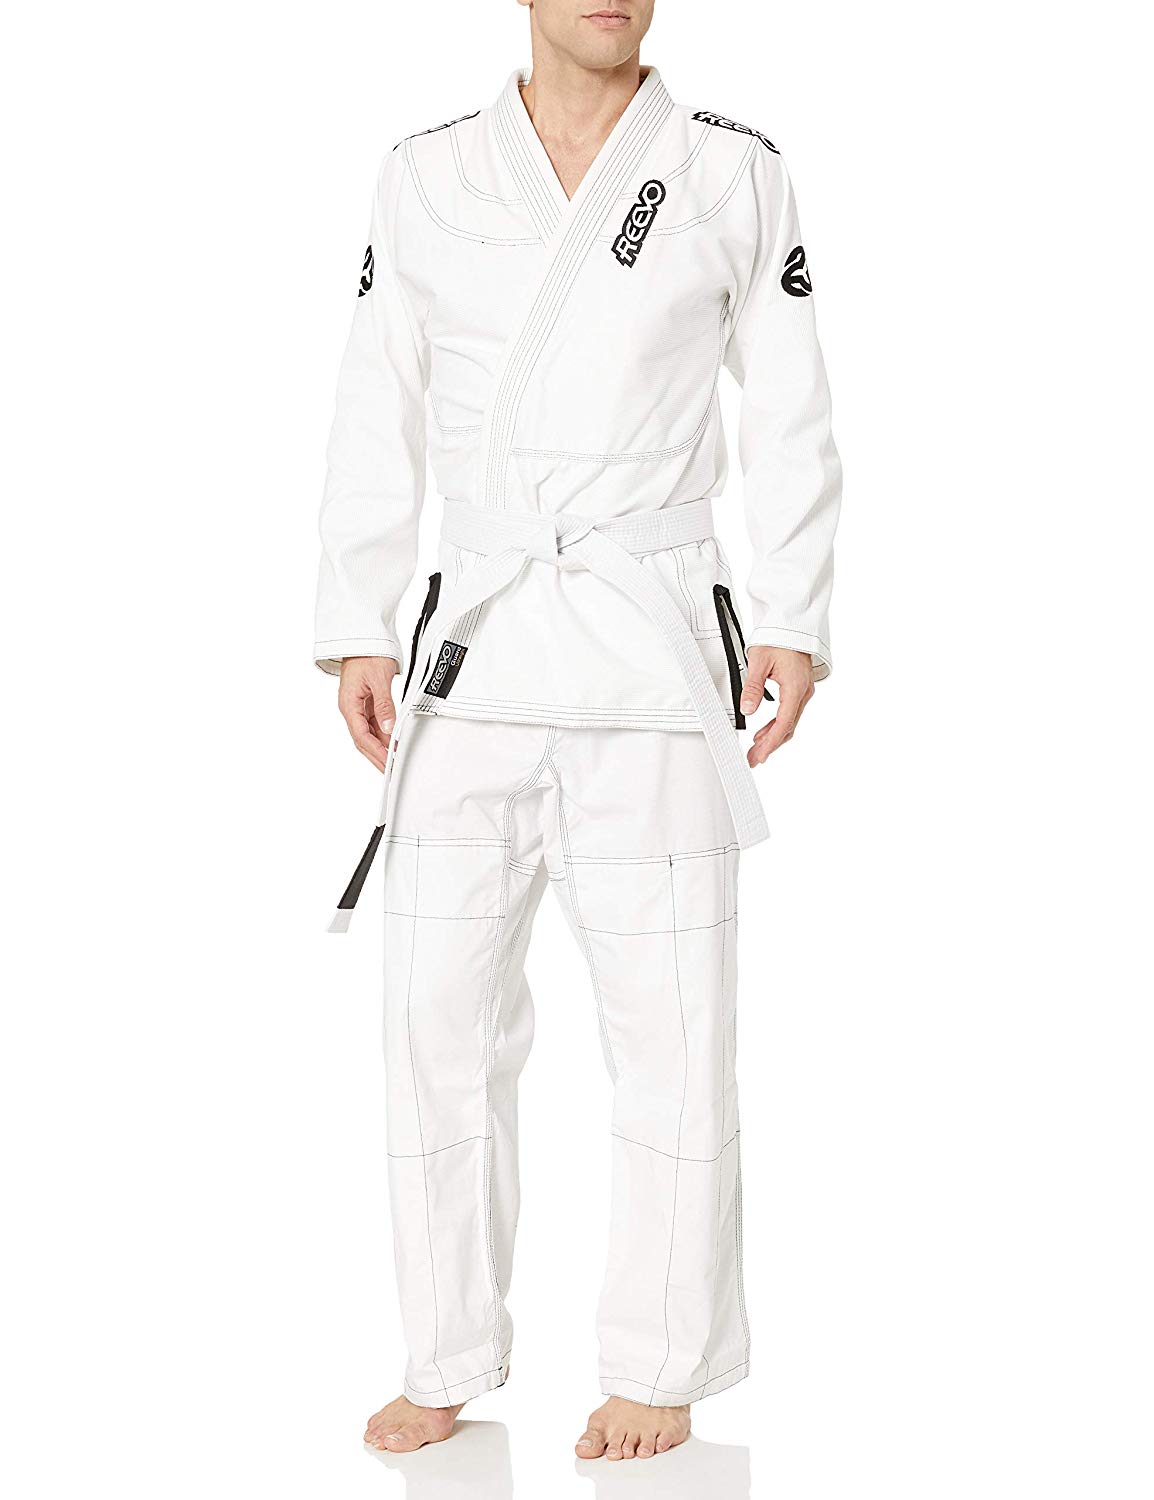 Reevo Guard Ultralight BJJ Gi for Kids with a Free White Belt